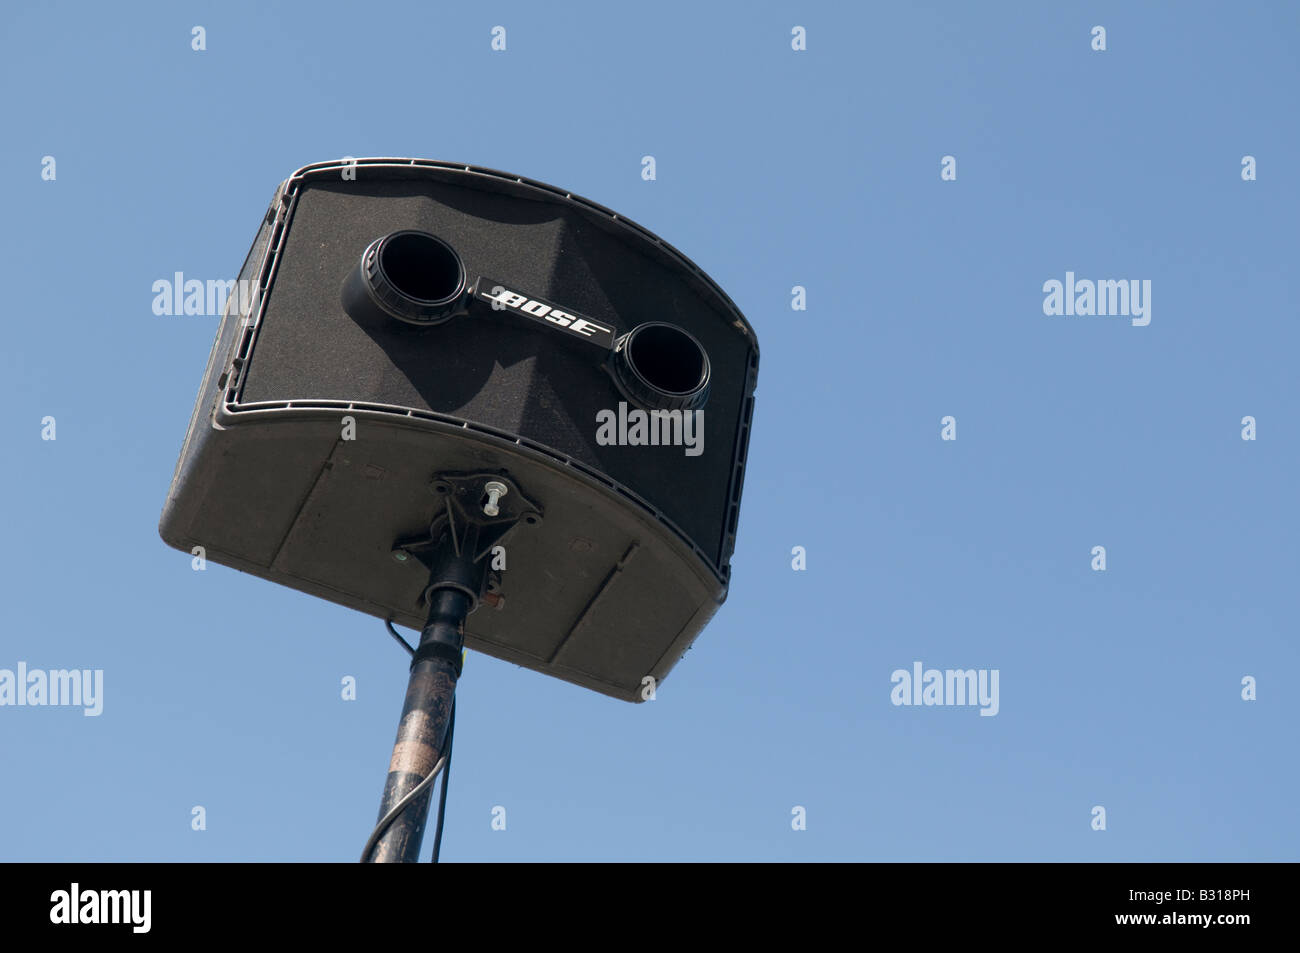 Bose loudspeaker public address system Stock Photo